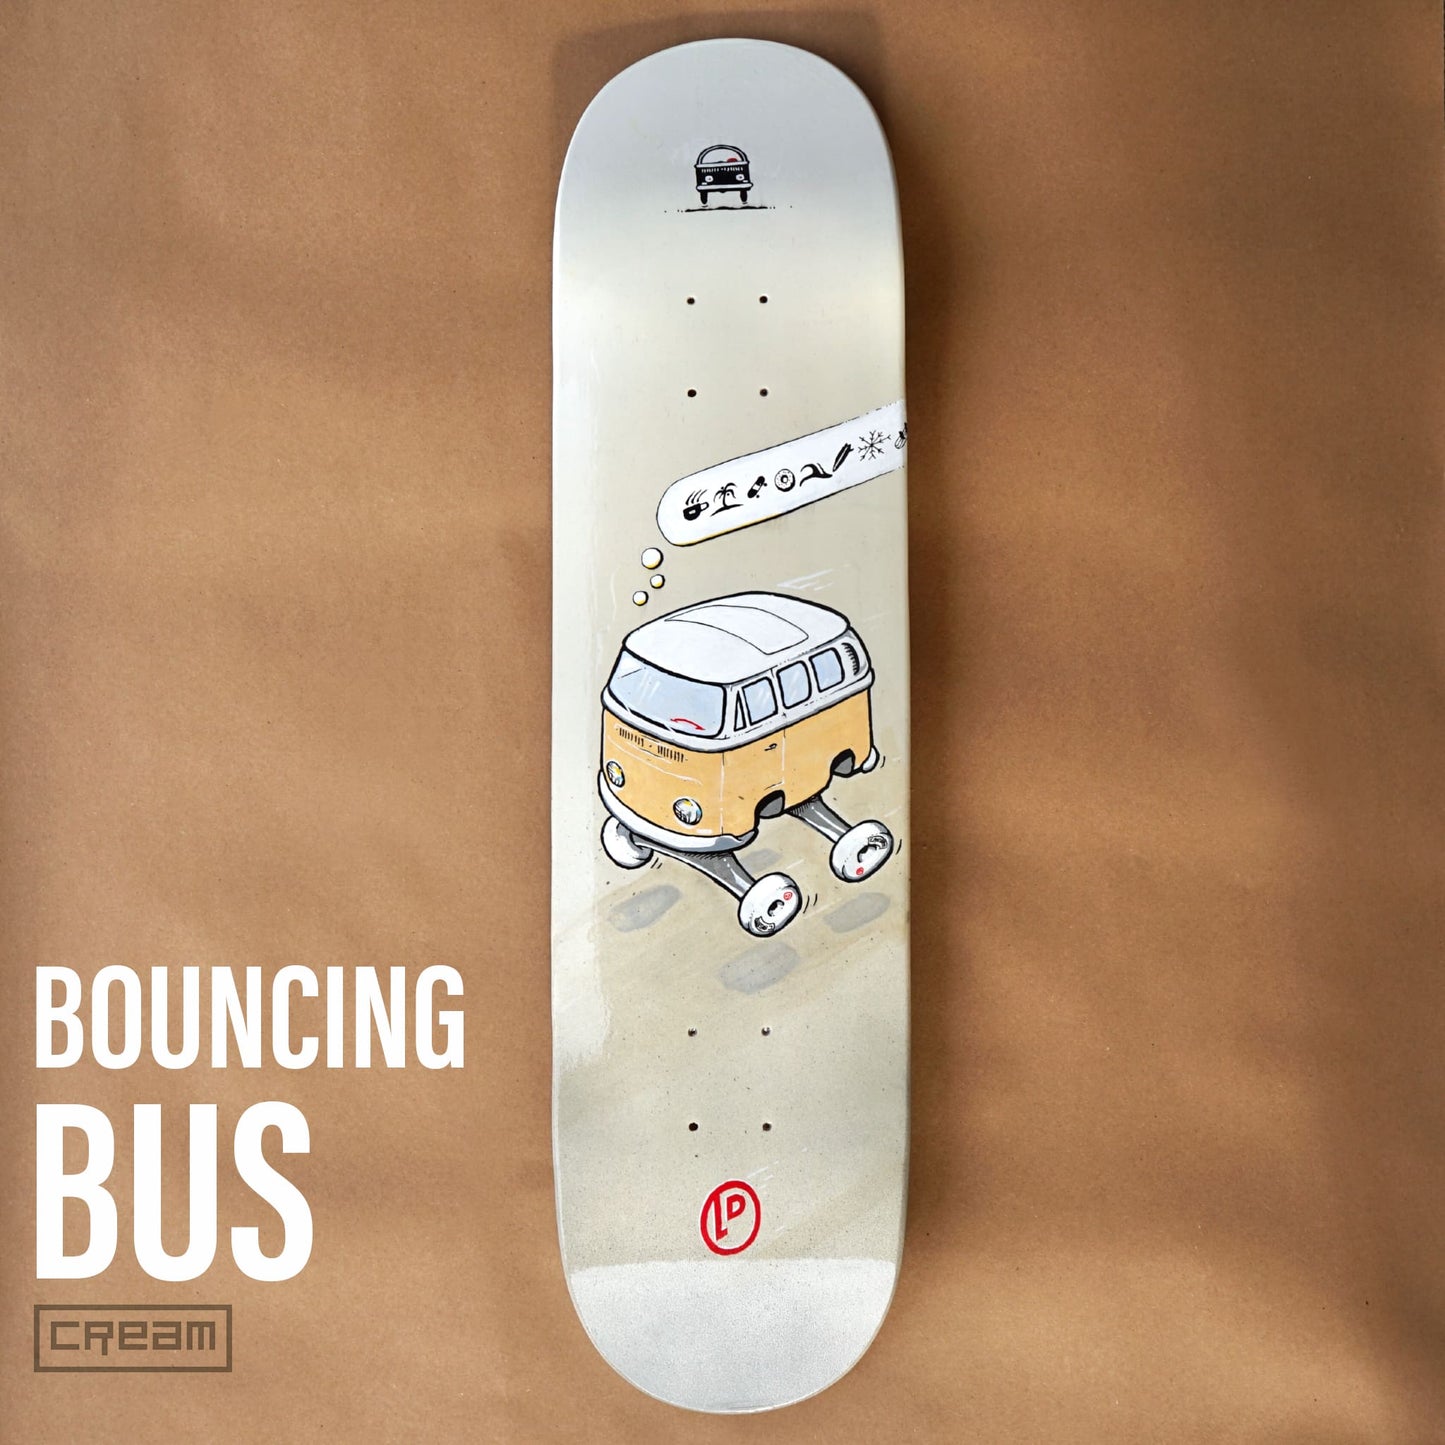 Bouncing Bus Deck - 1